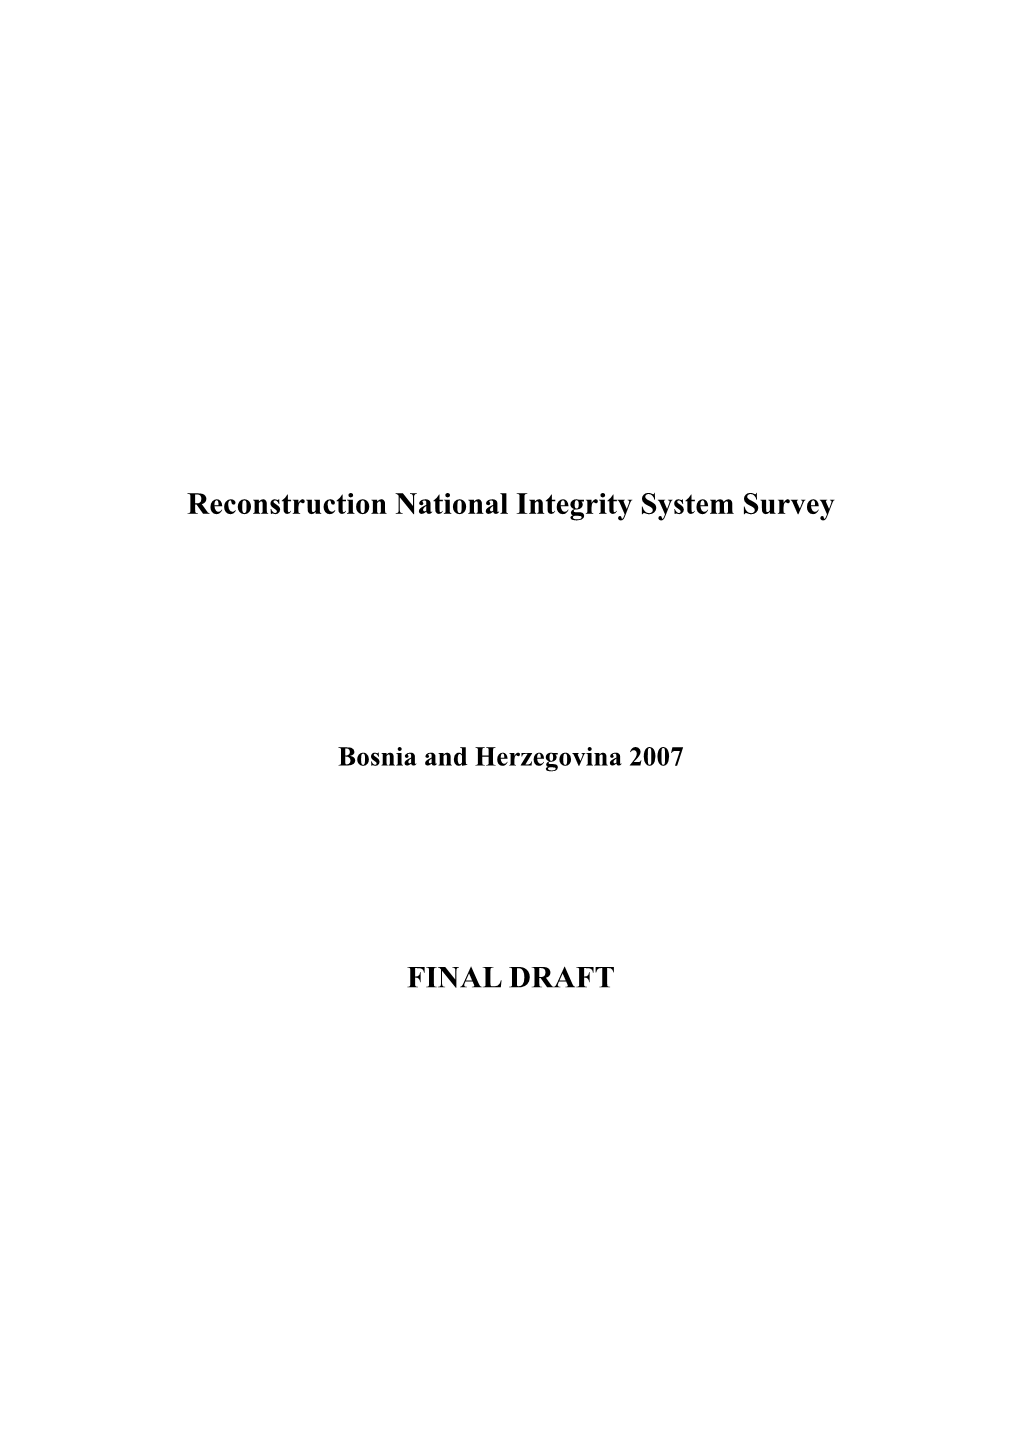 Reconstruction National Integrity System Survey FINAL DRAFT